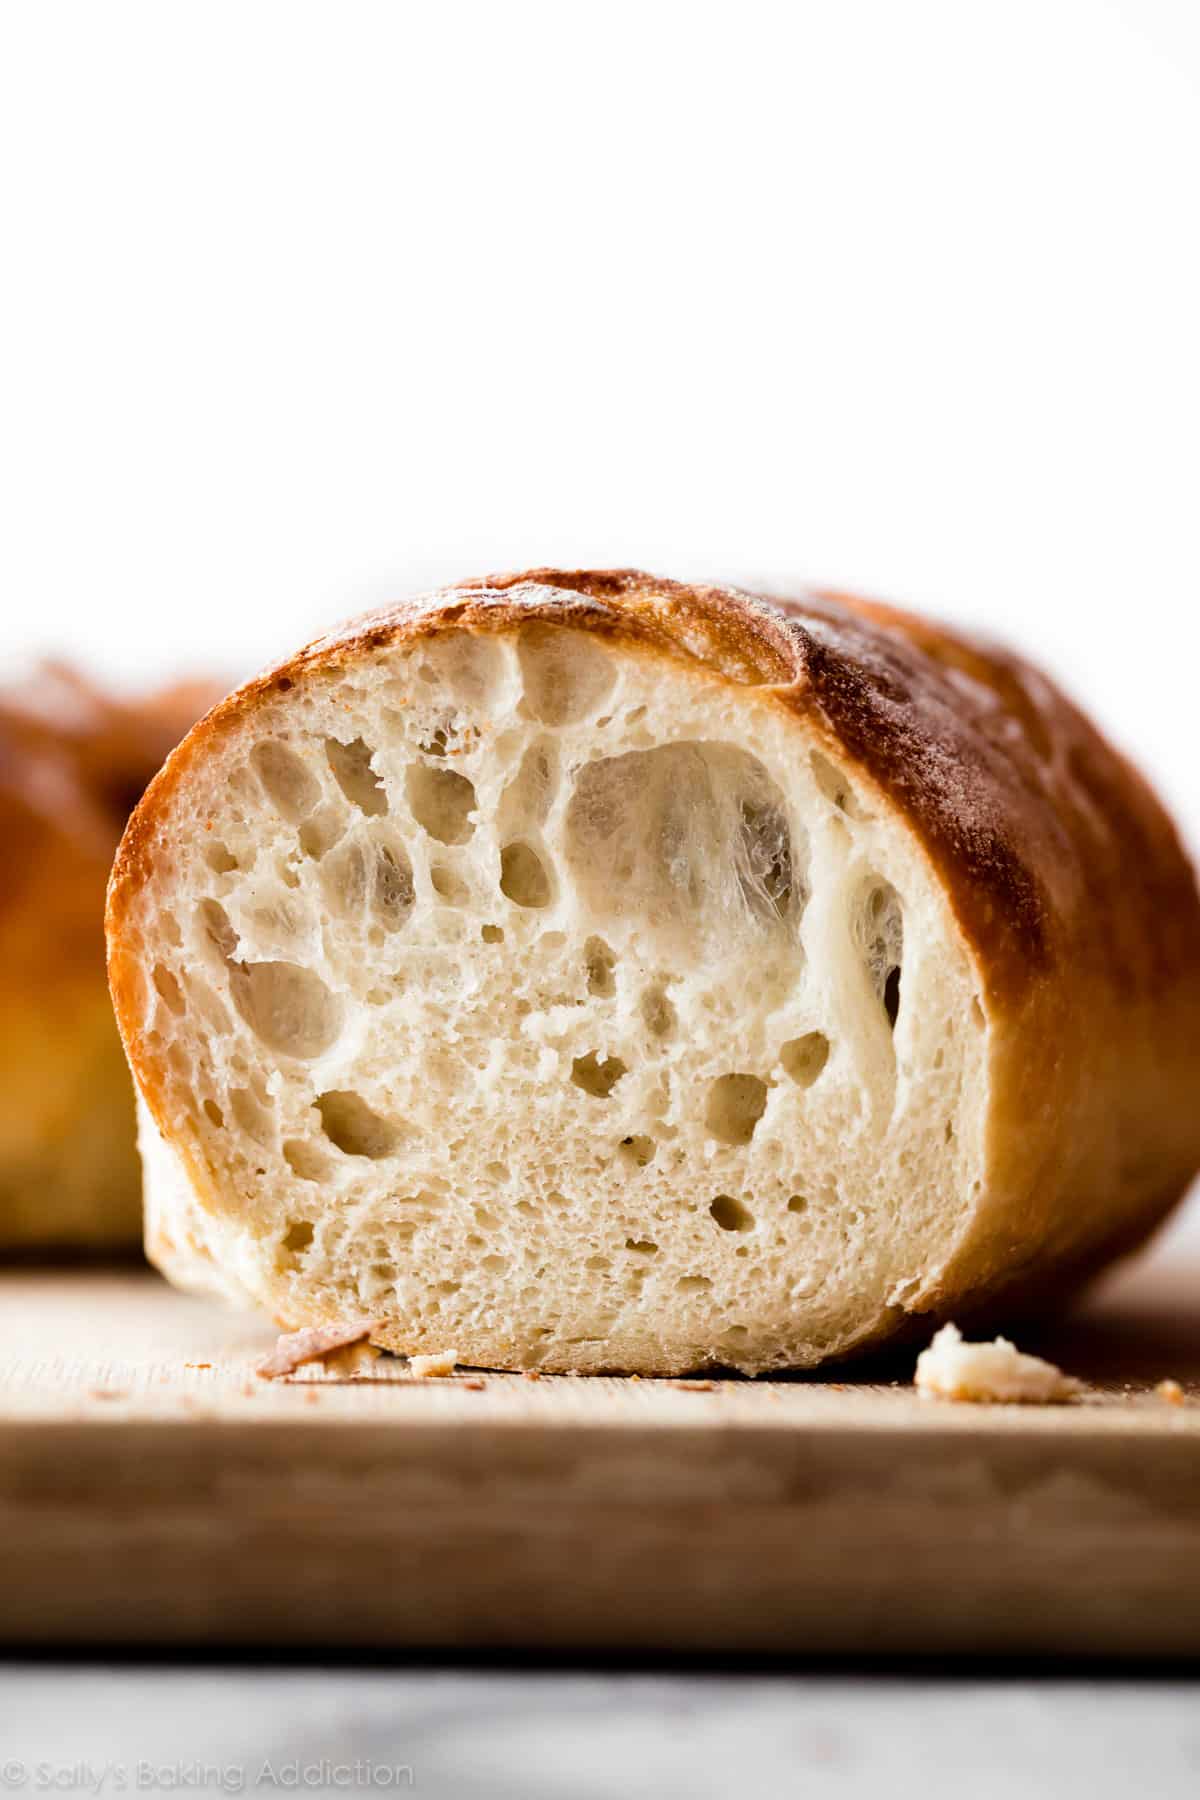 https://sallysbakingaddiction.com/wp-content/uploads/2019/12/homemade-artisan-bread-2.jpg